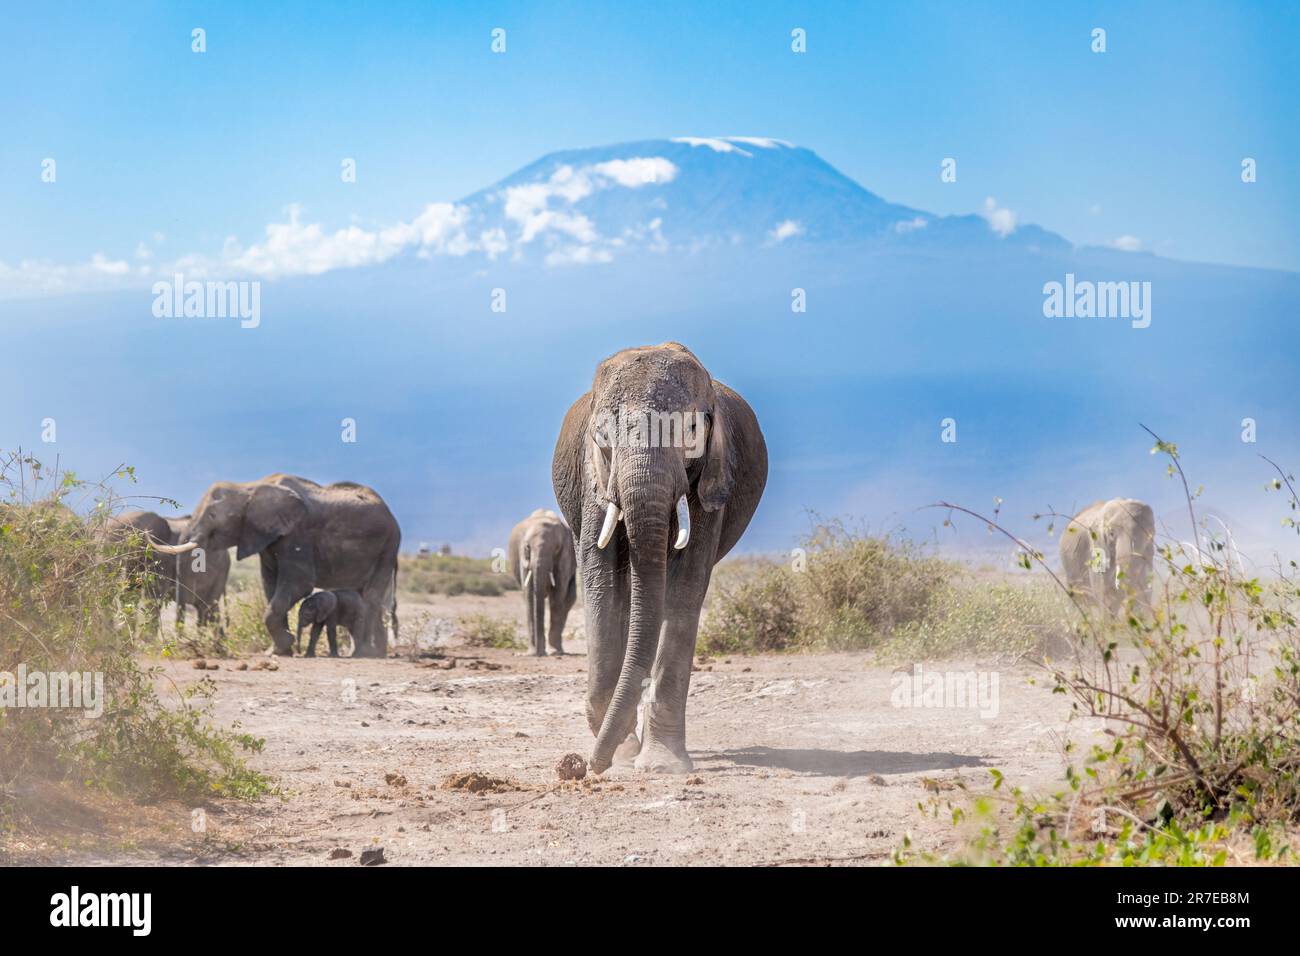 Die Elefanten kamen dem Fotografen Sunny Saha Pramanick sehr nahe. AMBOSELI-NATIONALPARK, KENIA: ATEMBERAUBENDE Bilder zeigen einen majestätischen Elefanten Stockfoto